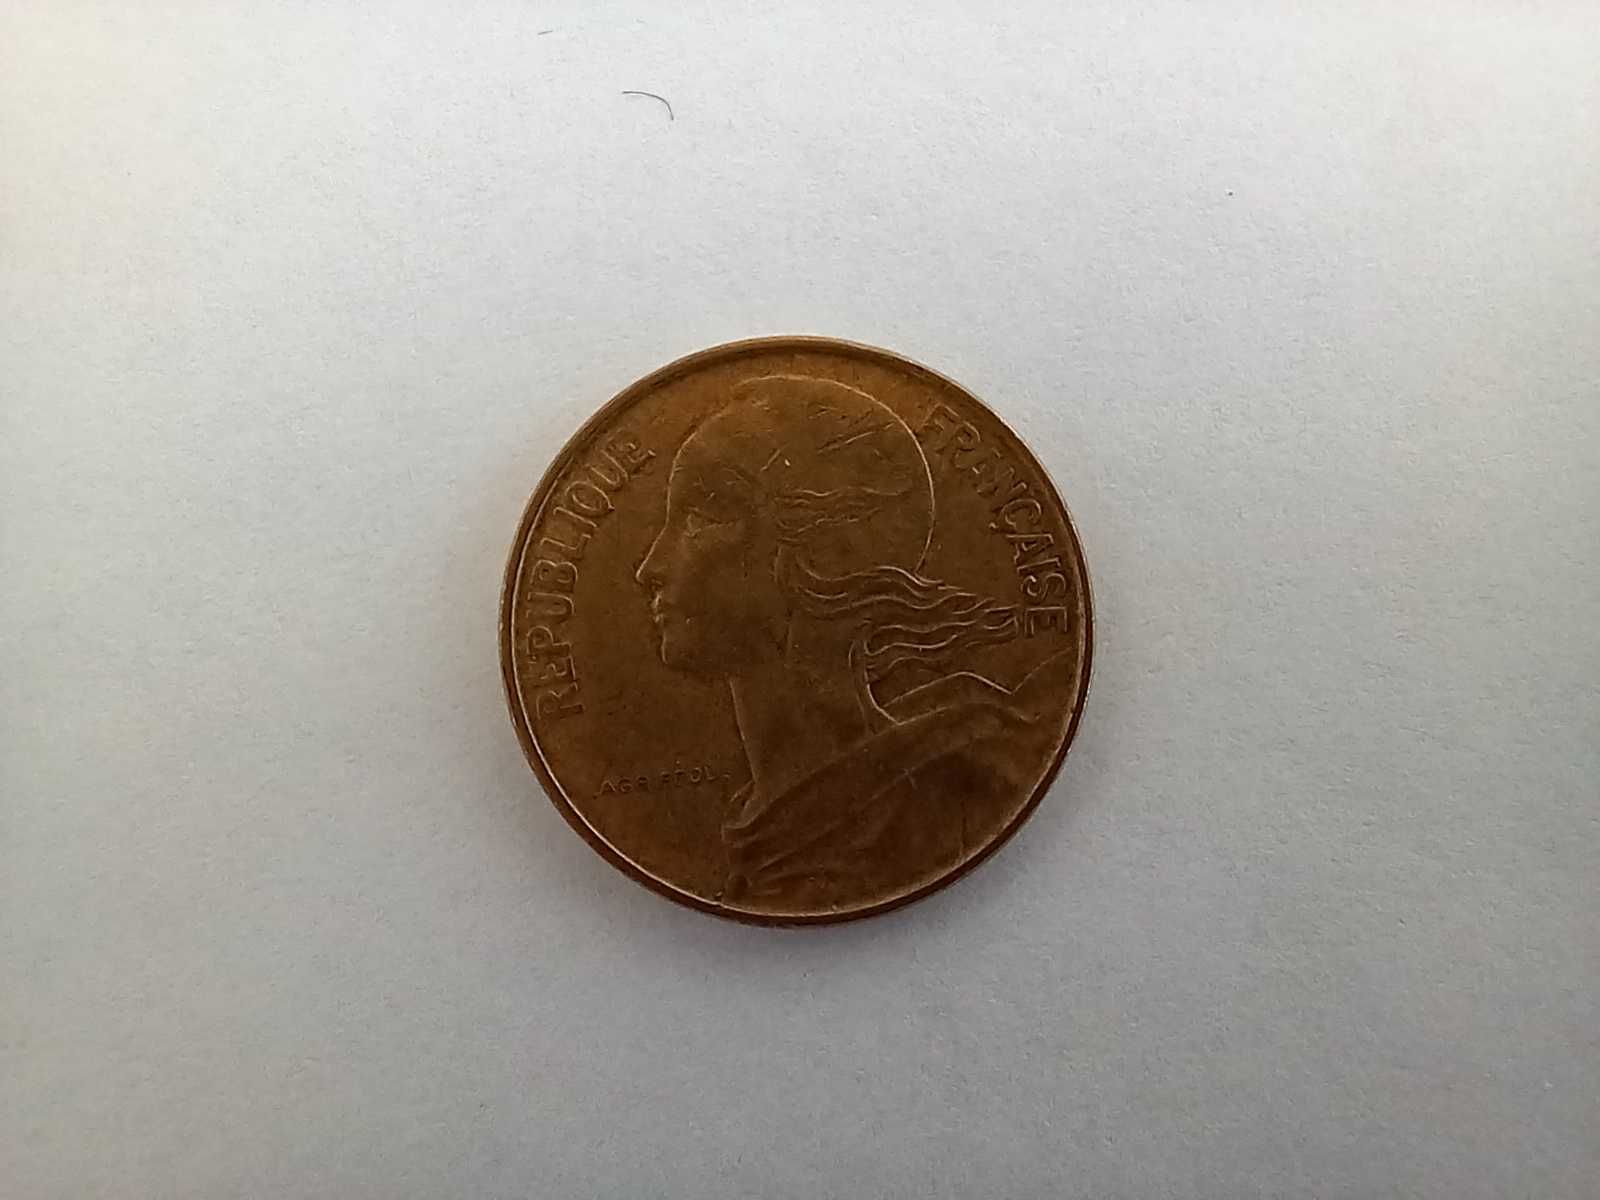 Moneta Francja- 10 centymów 1972 /21/